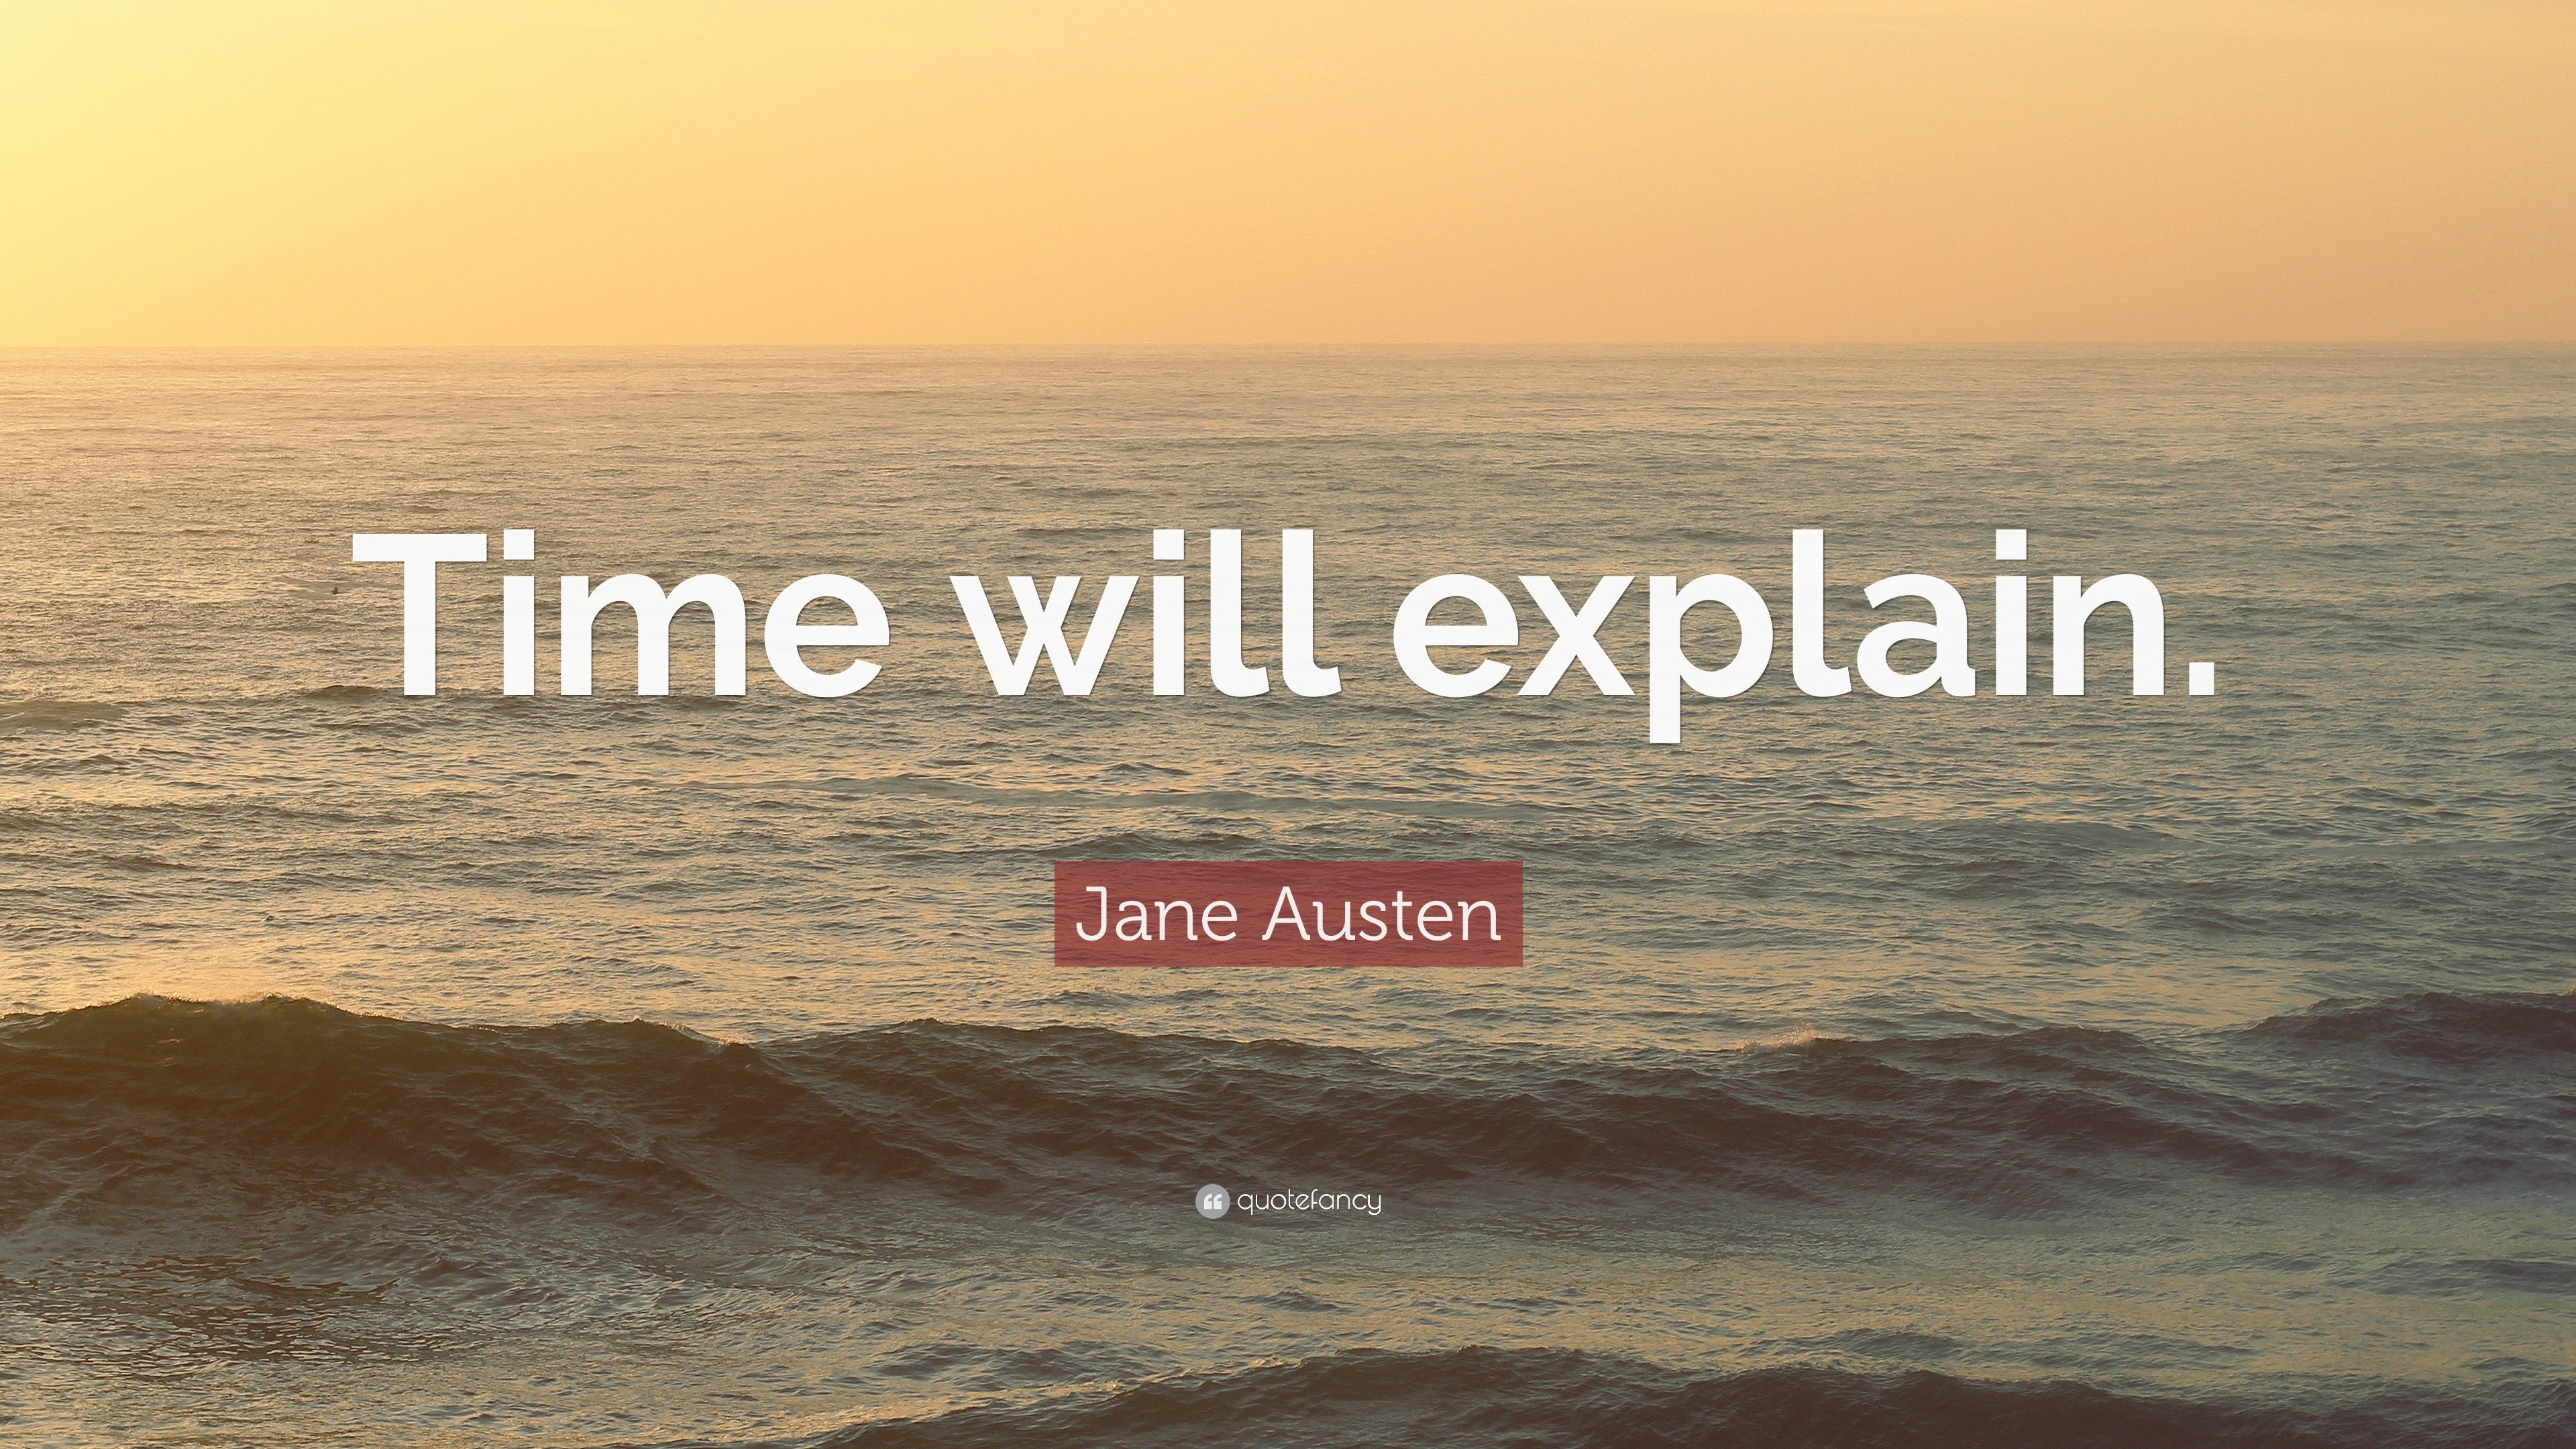 Jane Austen Quote: “Time will explain.”